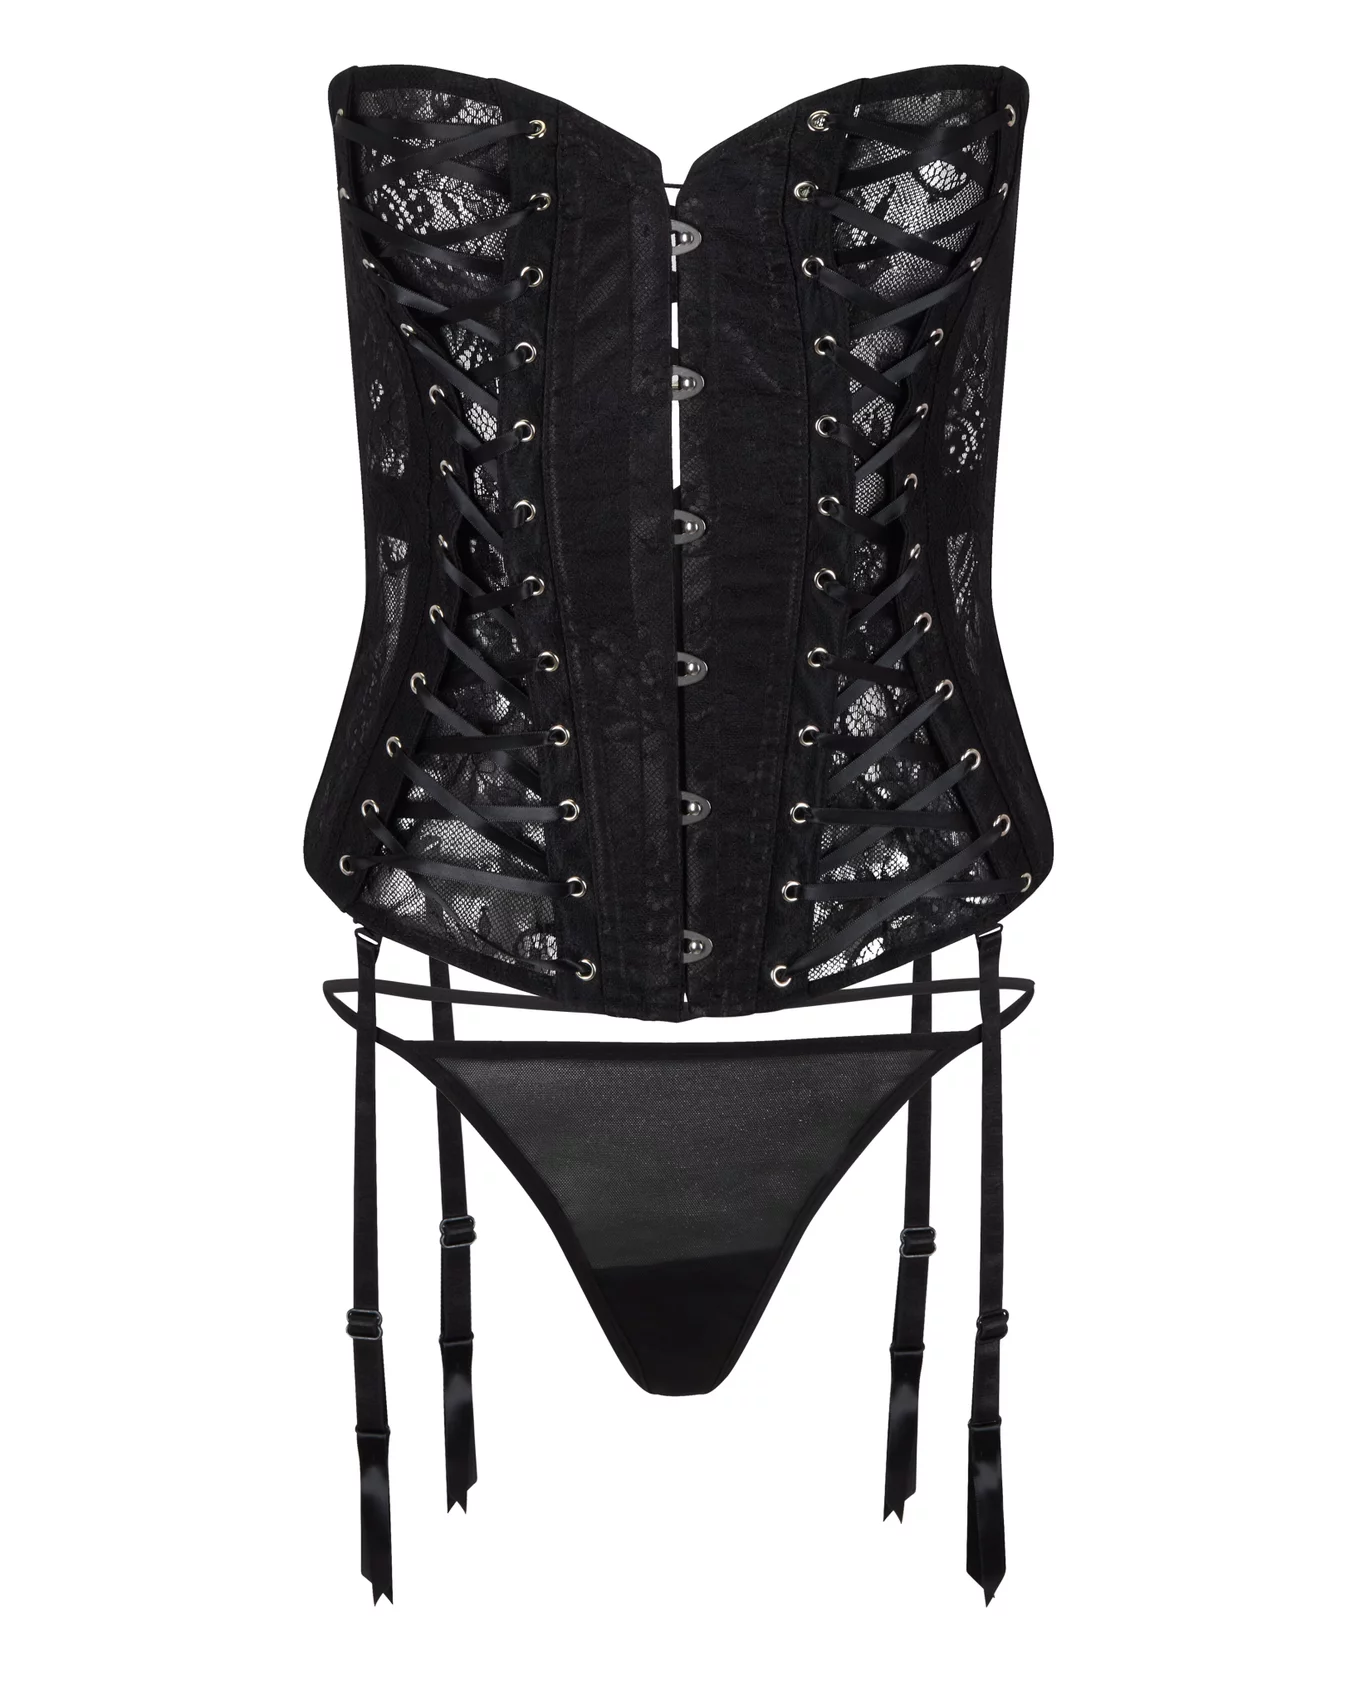 Missyempire x Emily Faye Miller tie back woven corset top co-ord in black